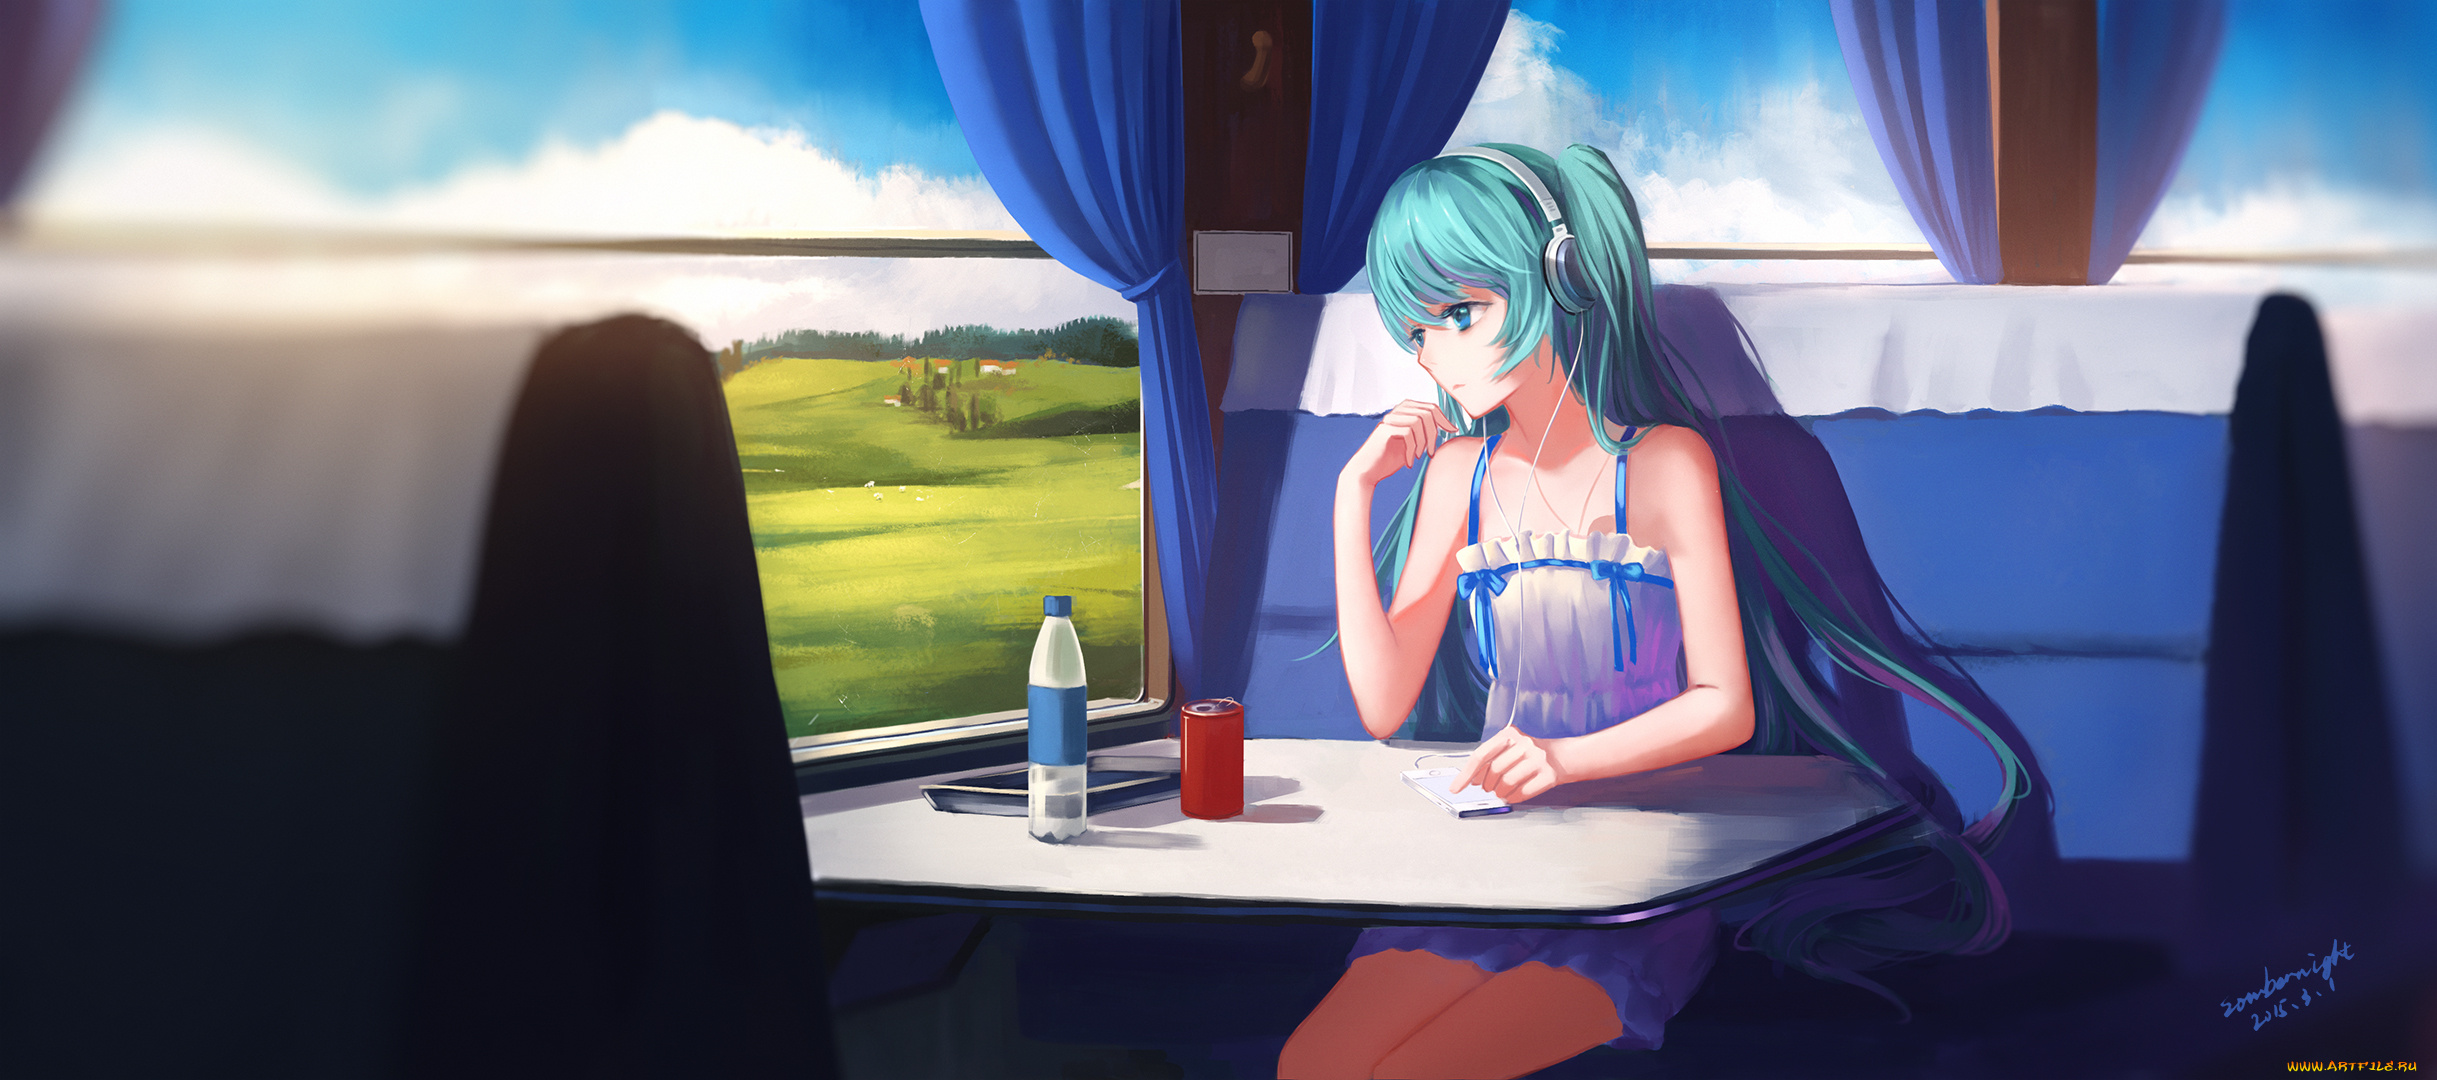 аниме, vocaloid, hatsune, miku, панорама, окно, поезд, девушка, арт, sombernight